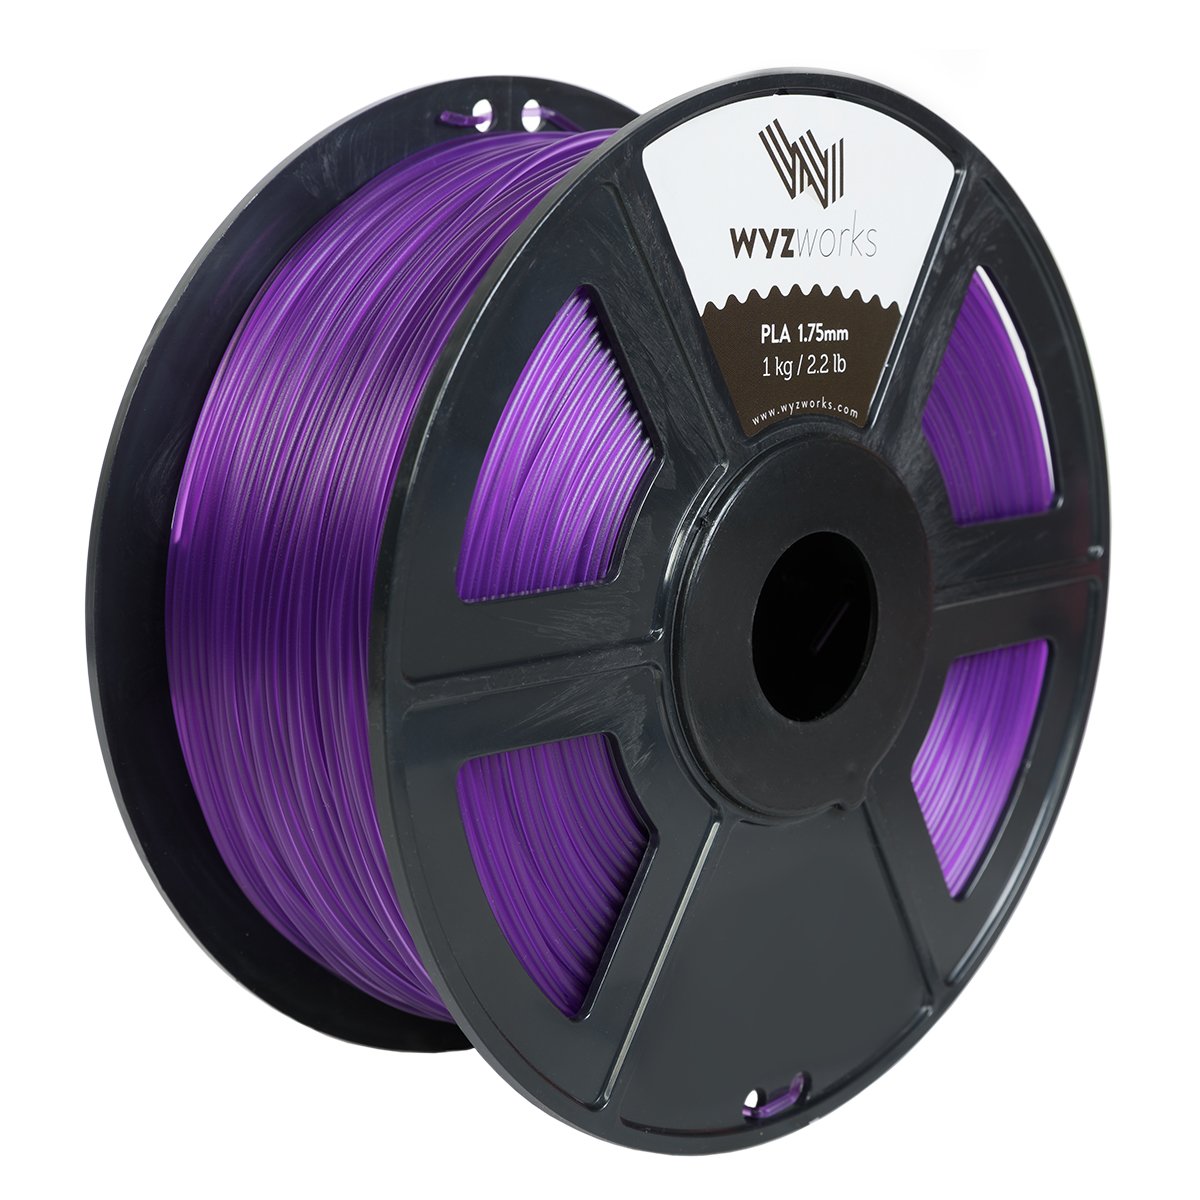 WYZworks PLA 1.75mm [ TRANSLUCENT PURPLE ] Premium Thermoplastic Polylactic Acid 3D Printer Filament - Dimensional Accuracy +/- 0.05mm 1kg / 2.2lb + [ Multiple Color Options Available ]